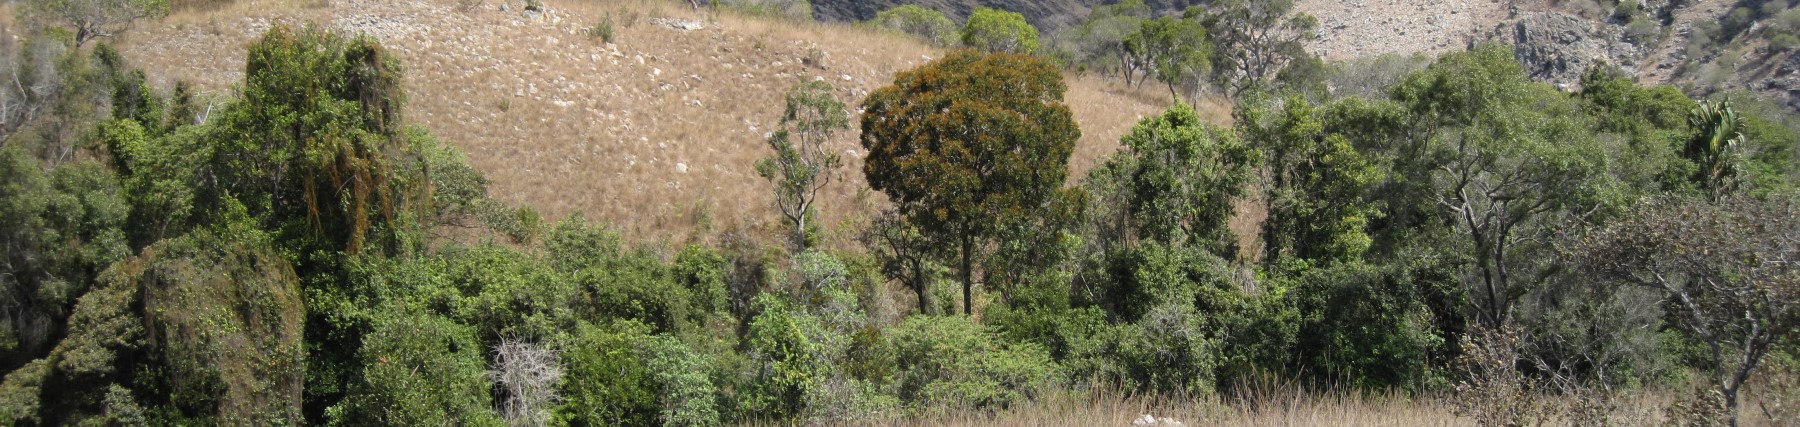 Podocarpus Habitat